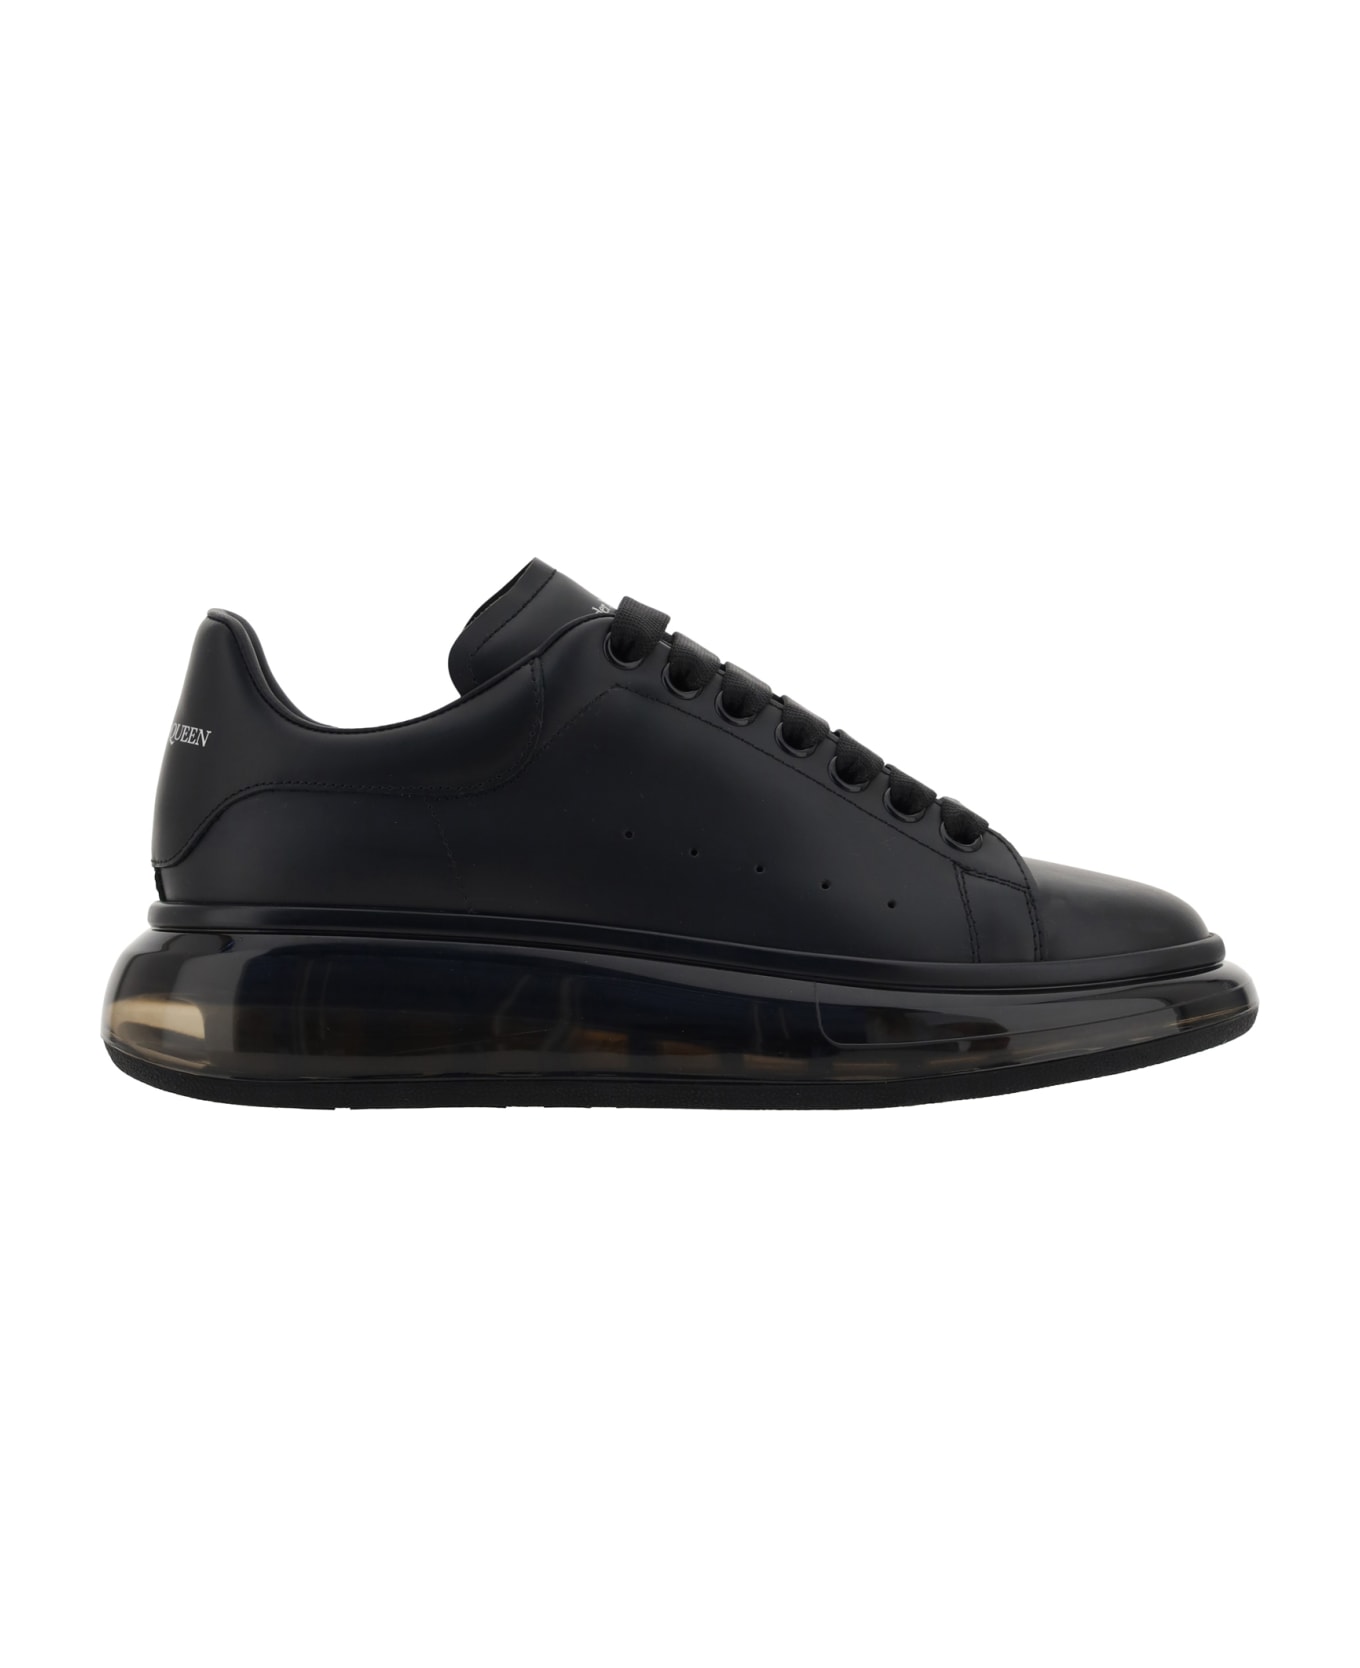 Alexander McQueen Oversized Leather Sneakers - Black/black/black スニーカー